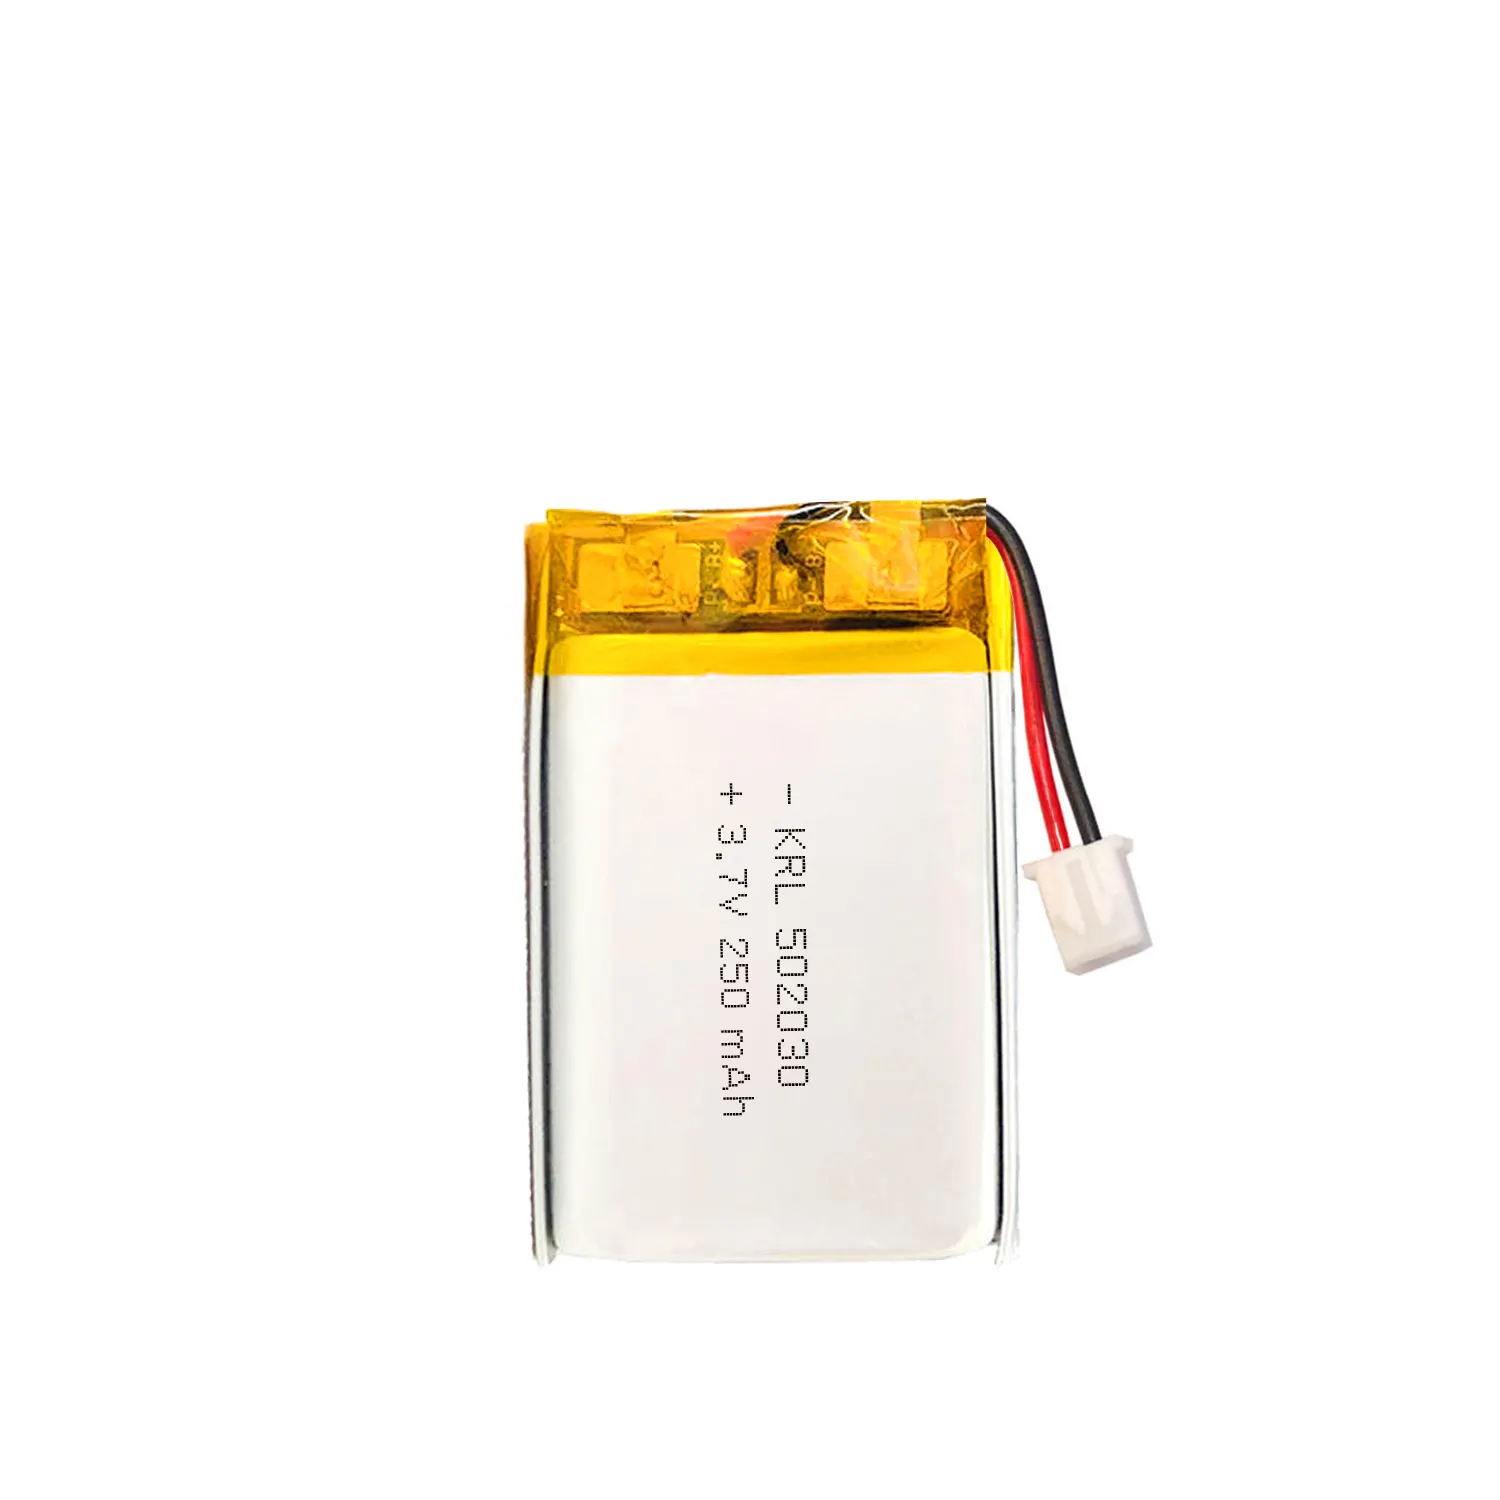 Li-polymer baterai isi ulang daya besar 502030 3.7v 250mah